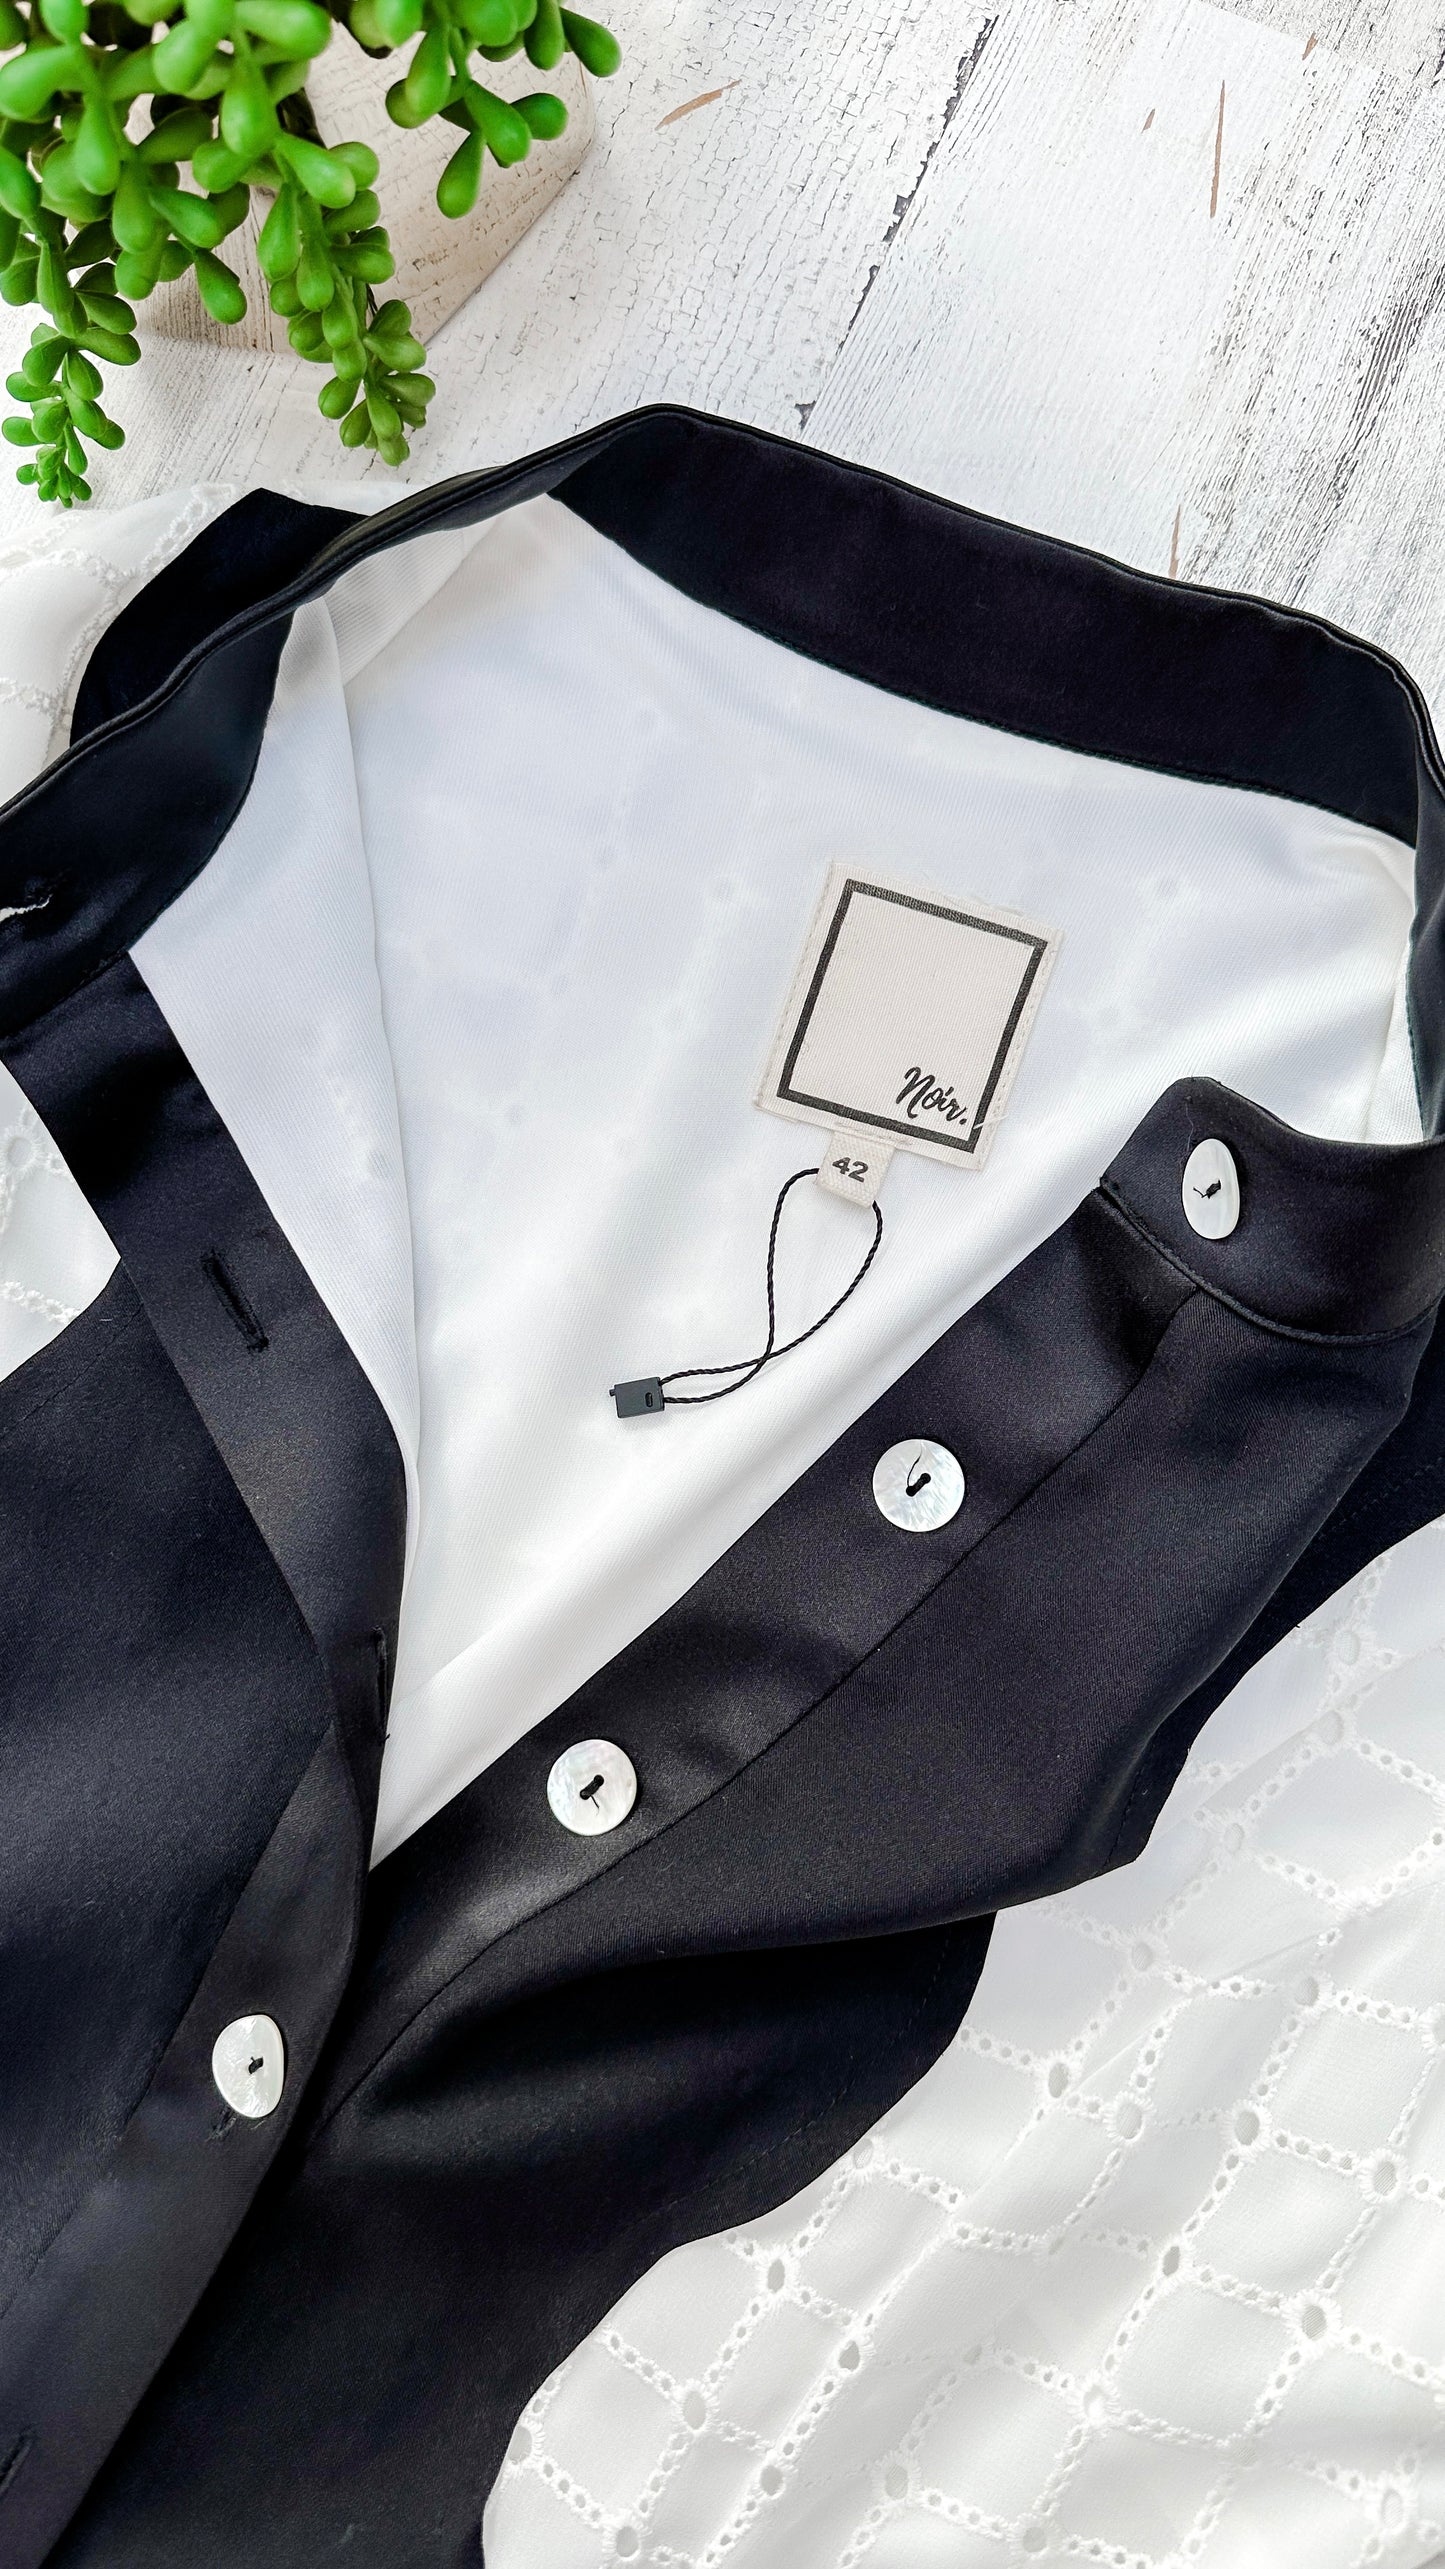 London Coat Company ' Noir ' Ivory & Black Contrast Shell Button Dress (EU 42 or US 10)